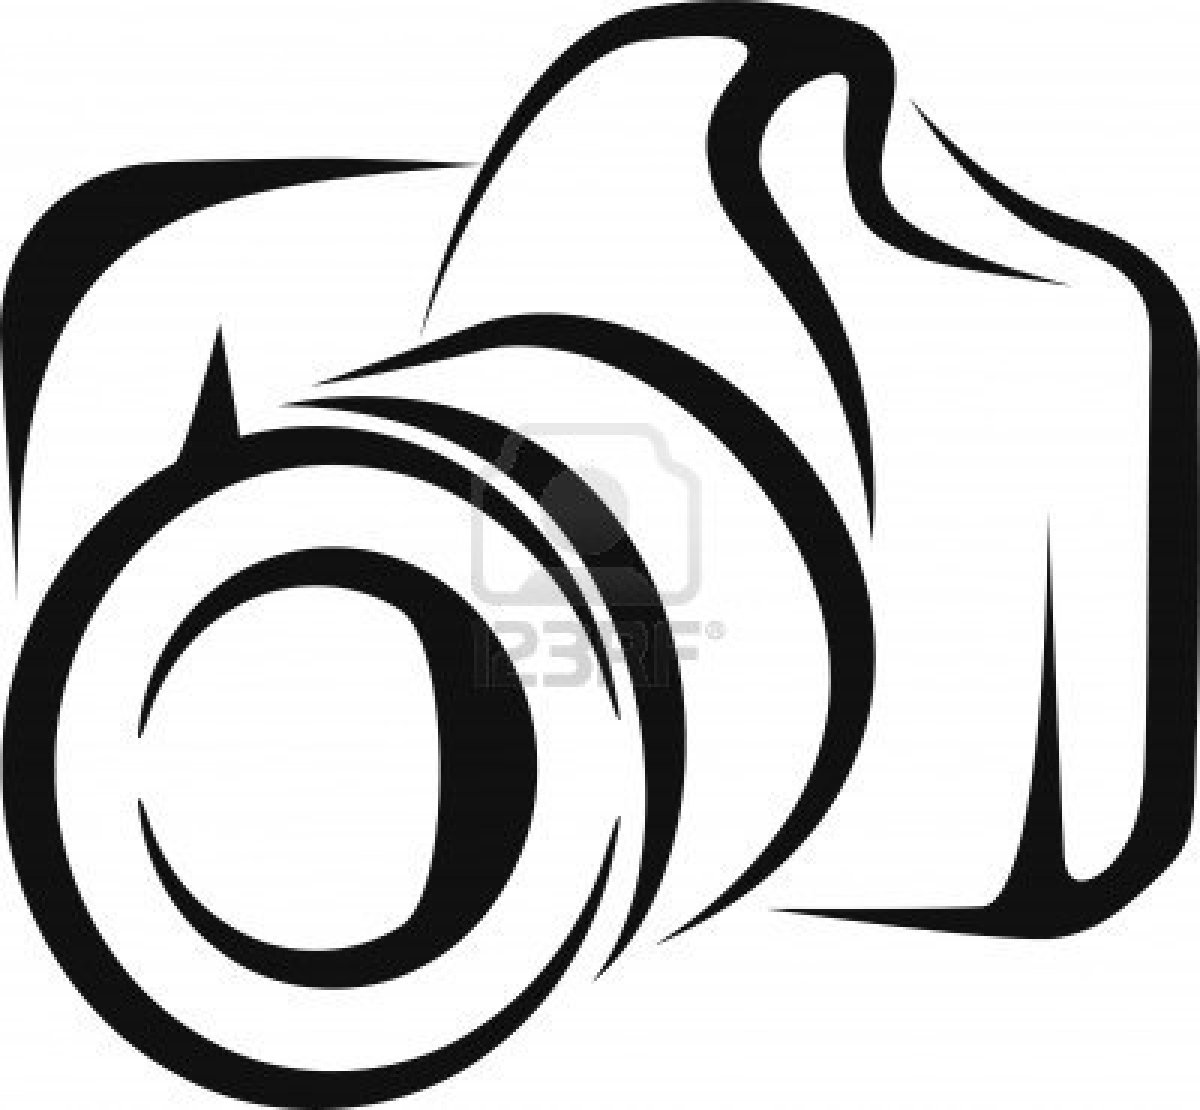 camera clip art for logo